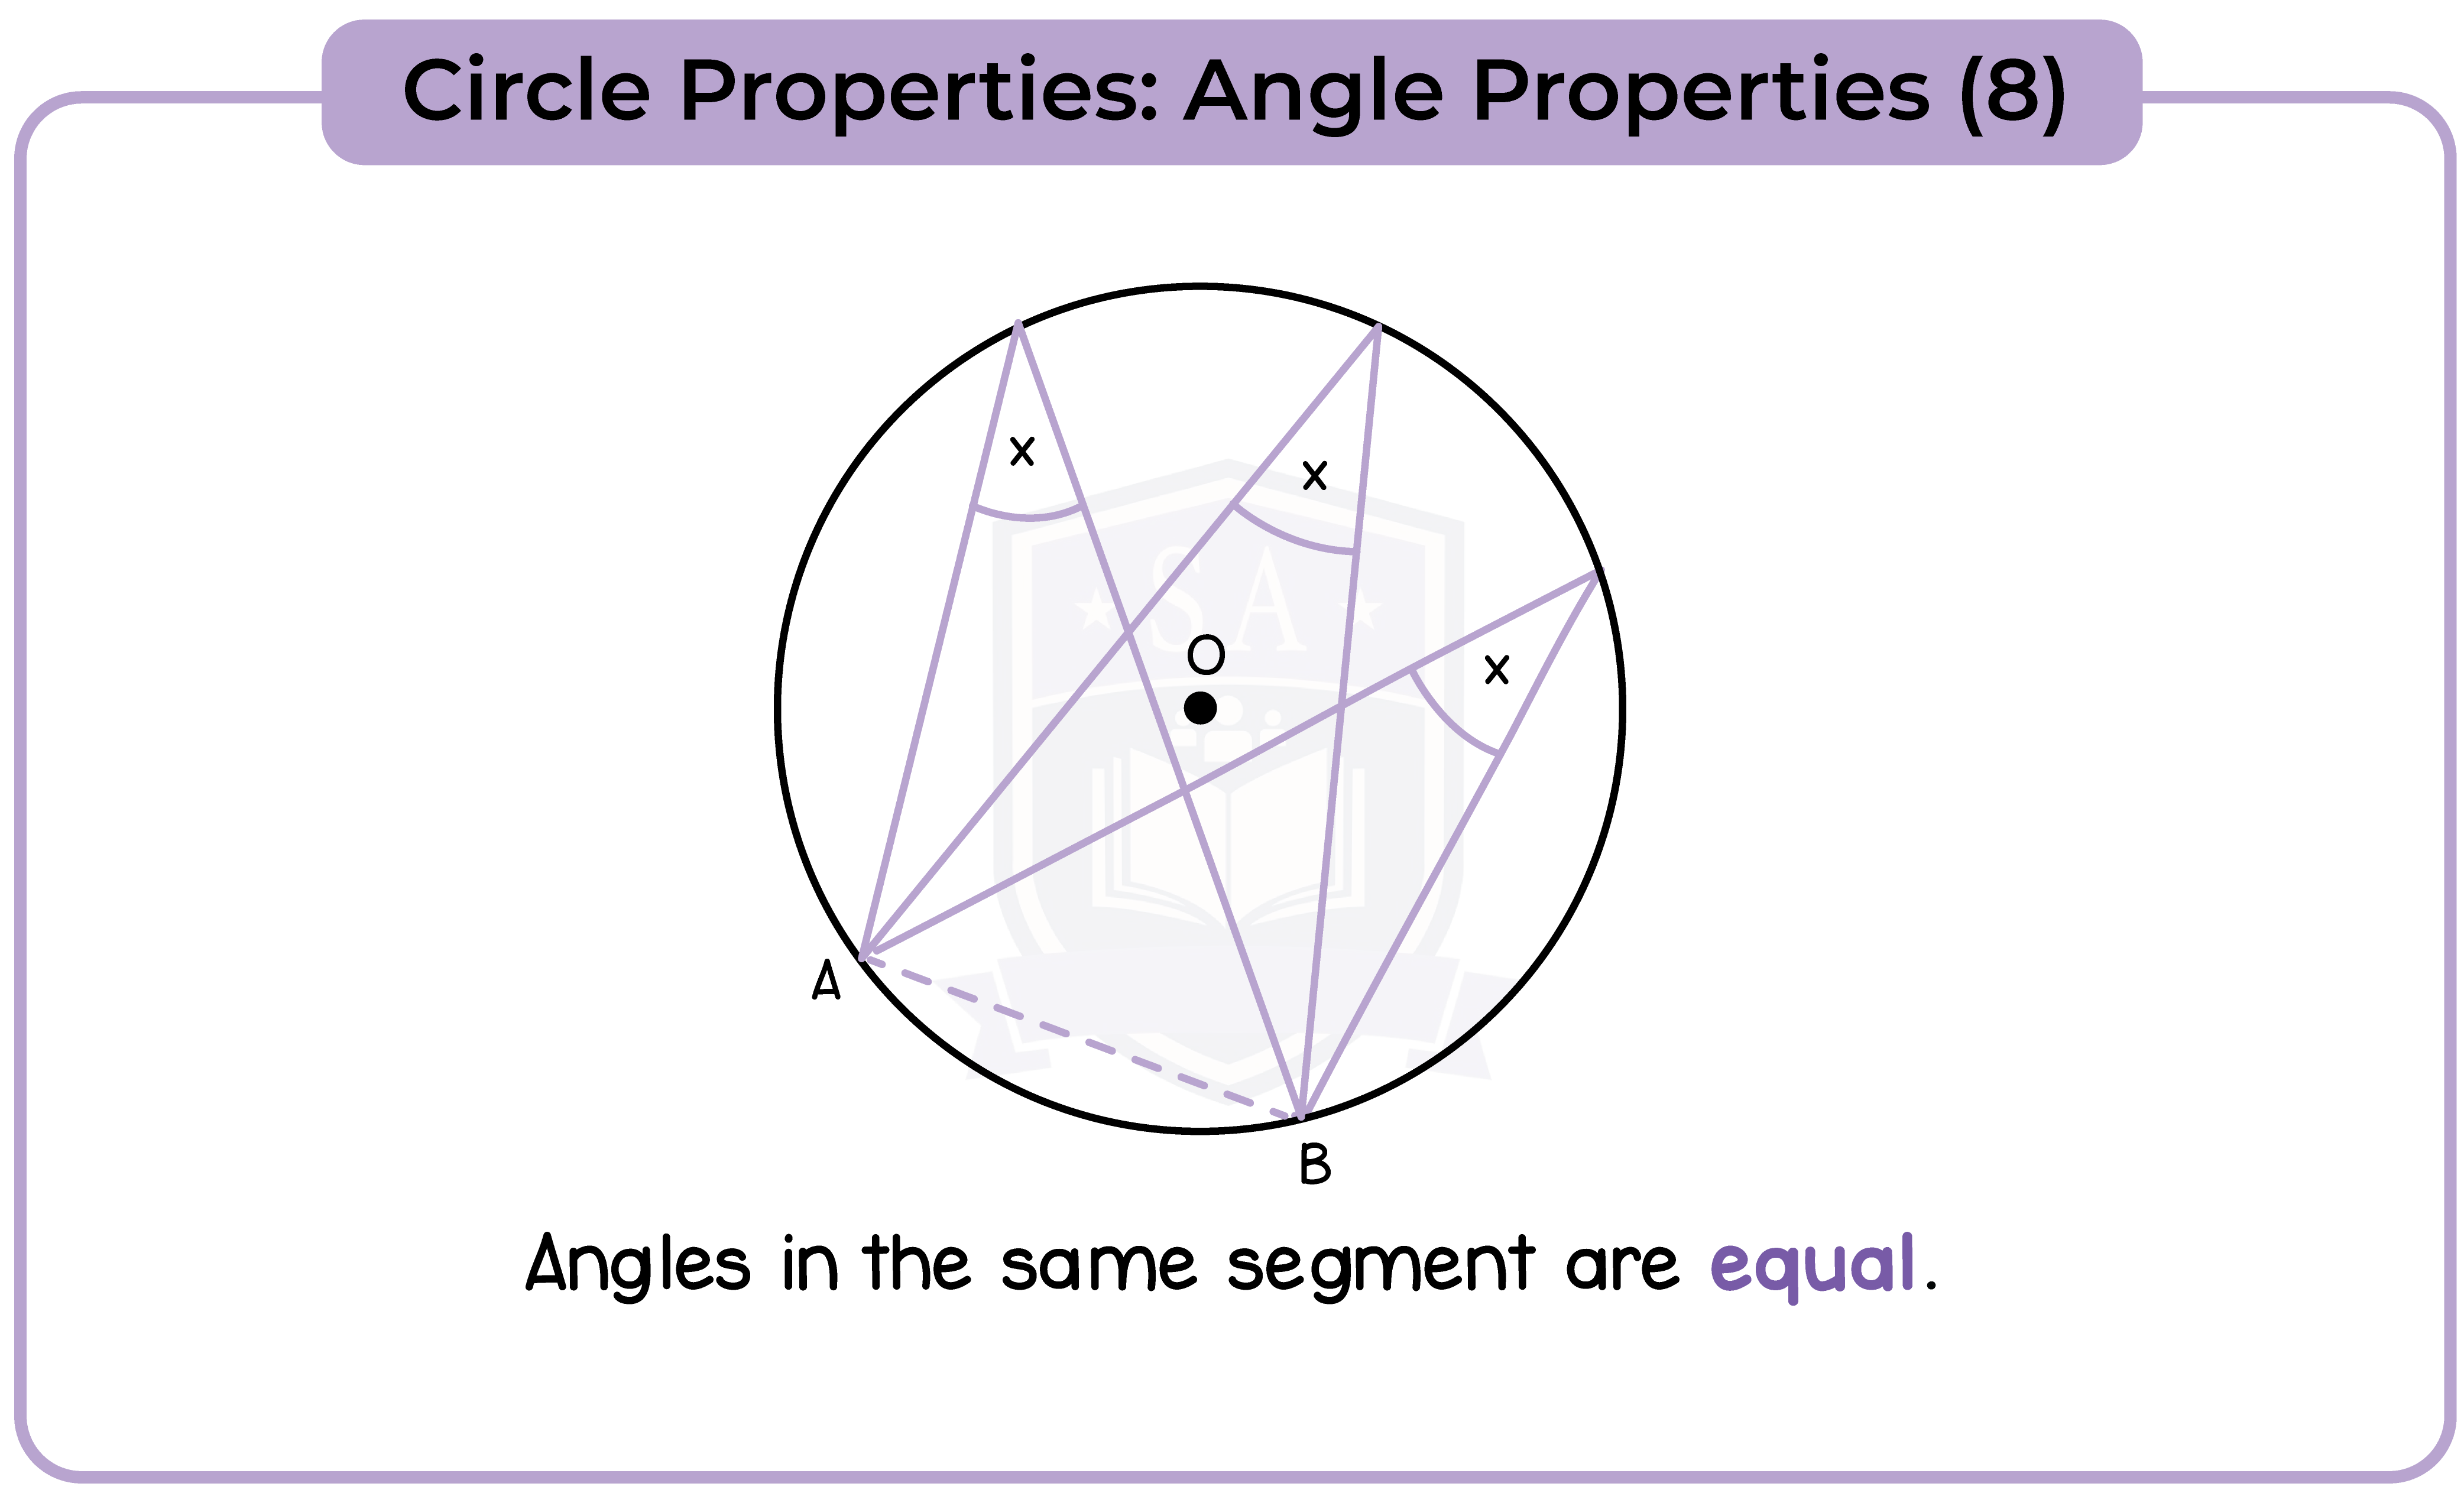 edexcel_igcse_mathematics a_topic 30_circle properties_012_Circle Properties: Angle Properties (8)